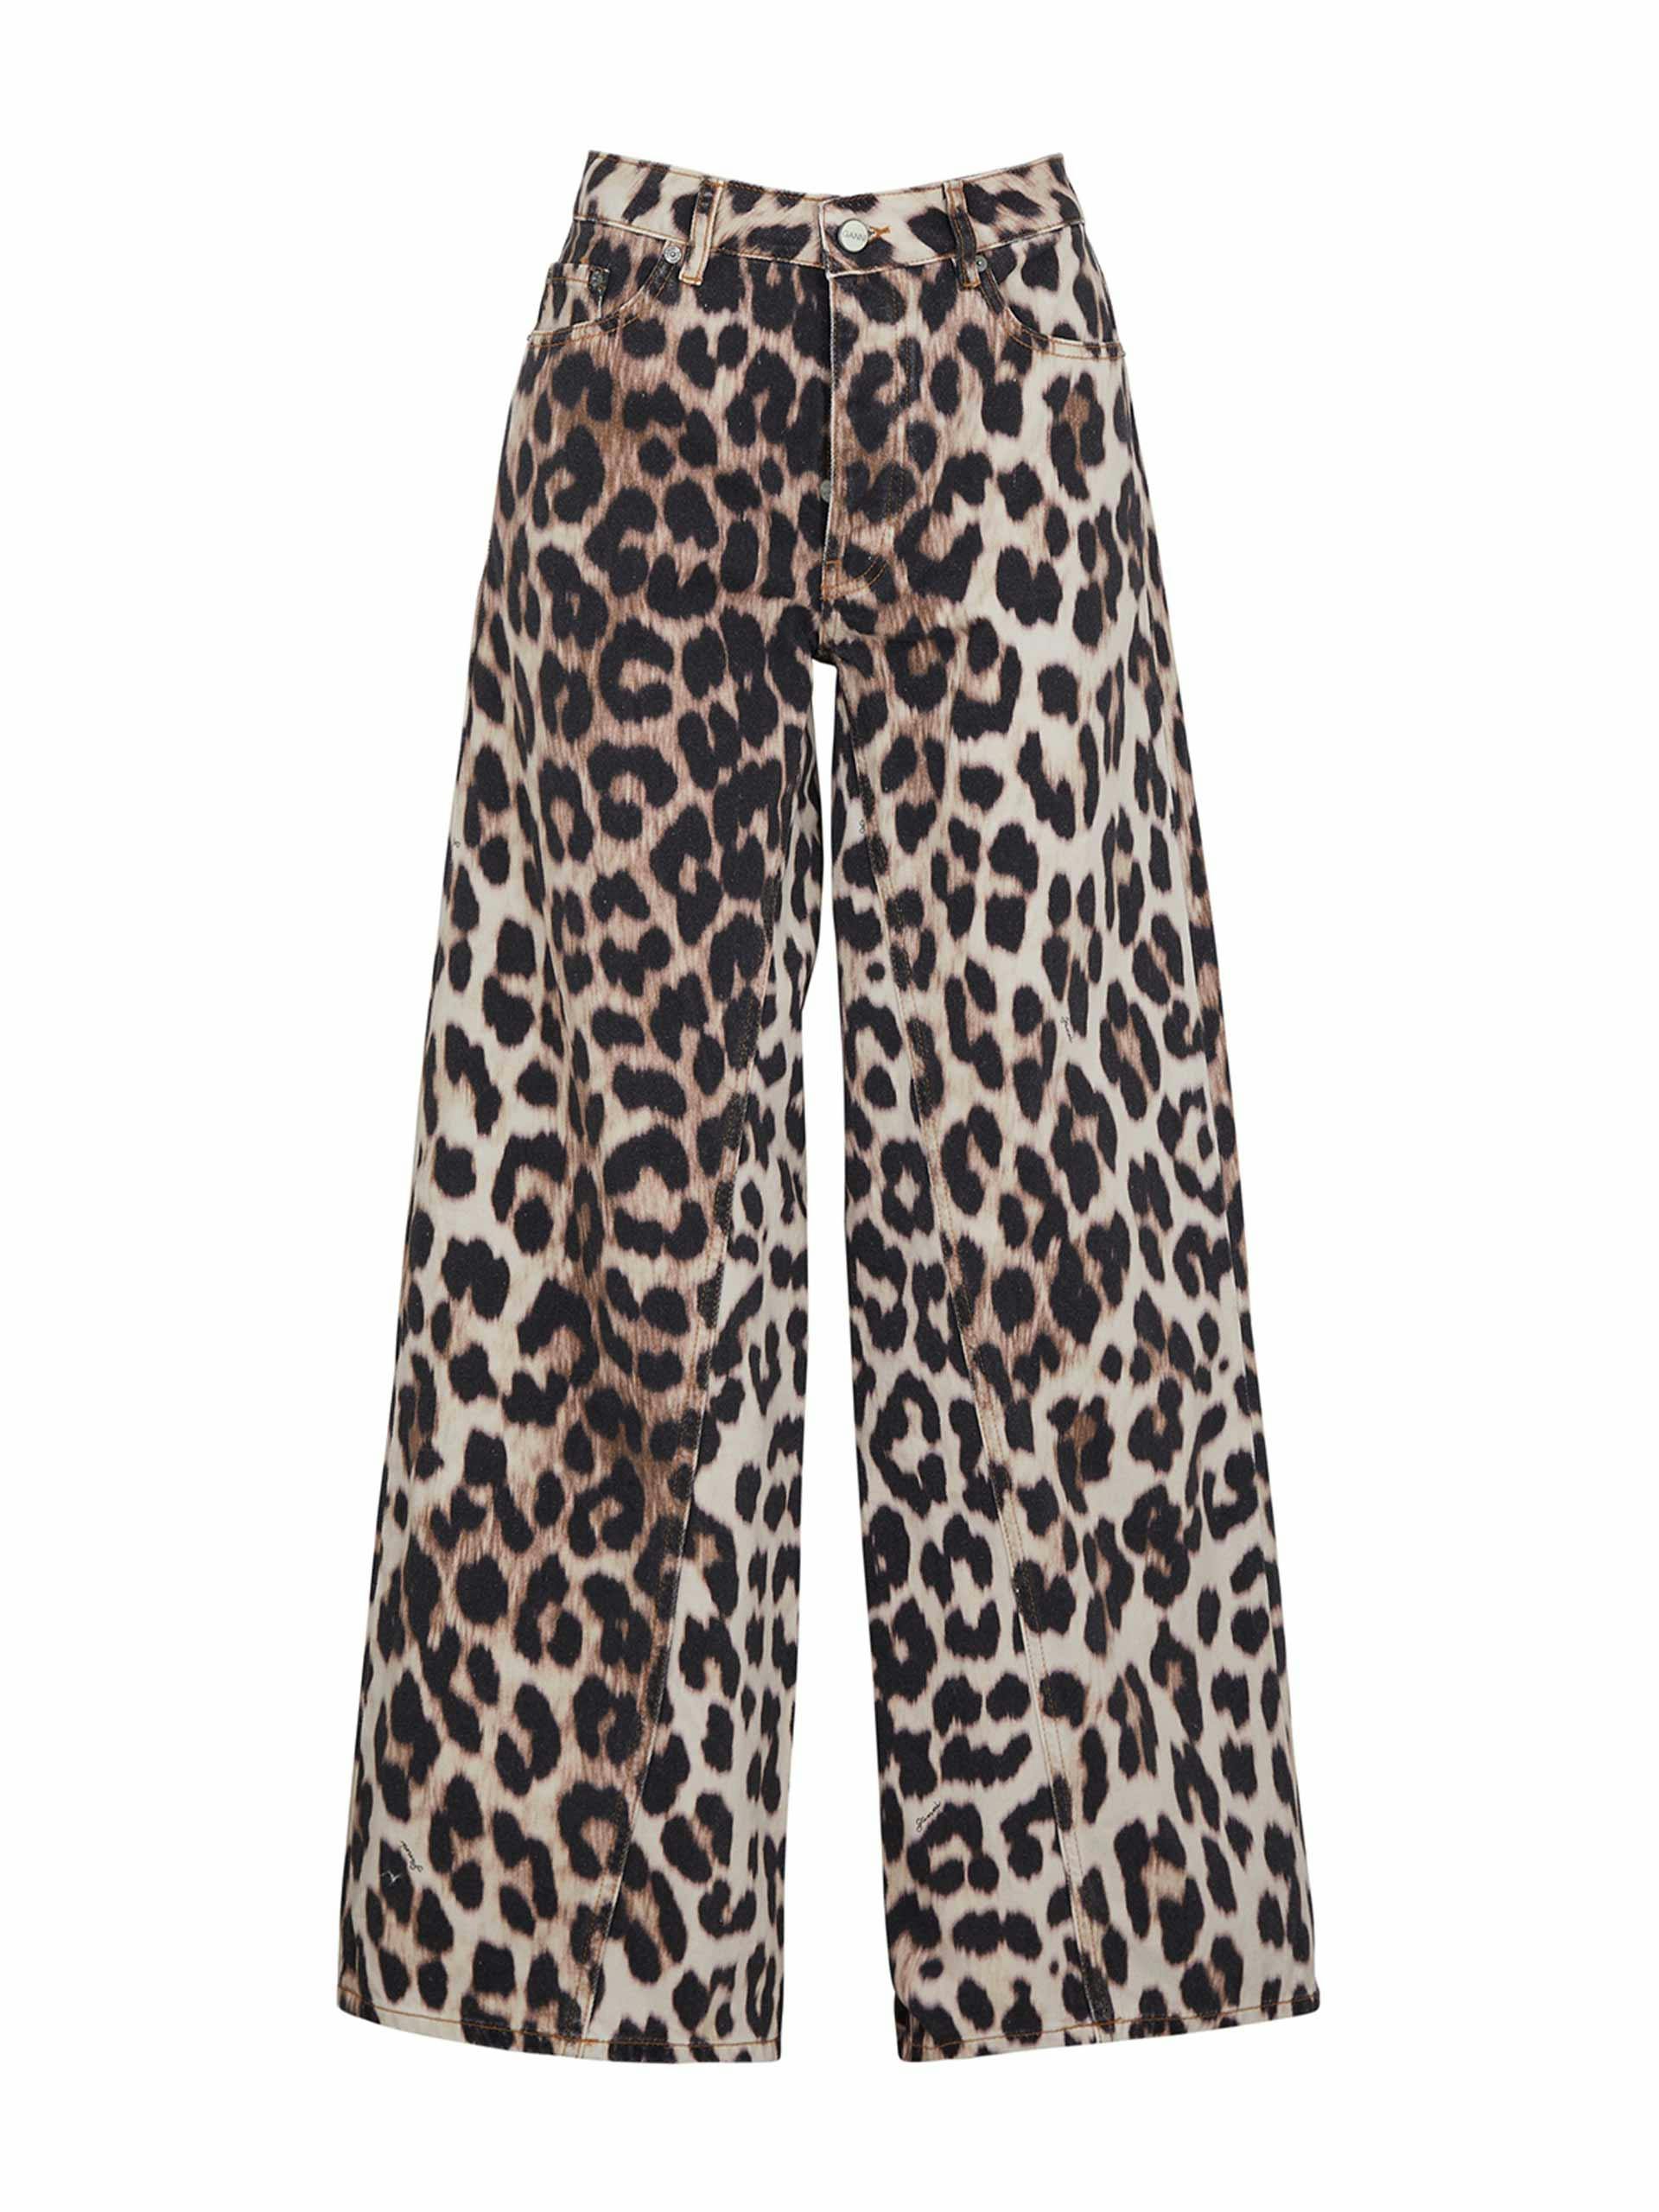 Leopard-print wide-leg jeans